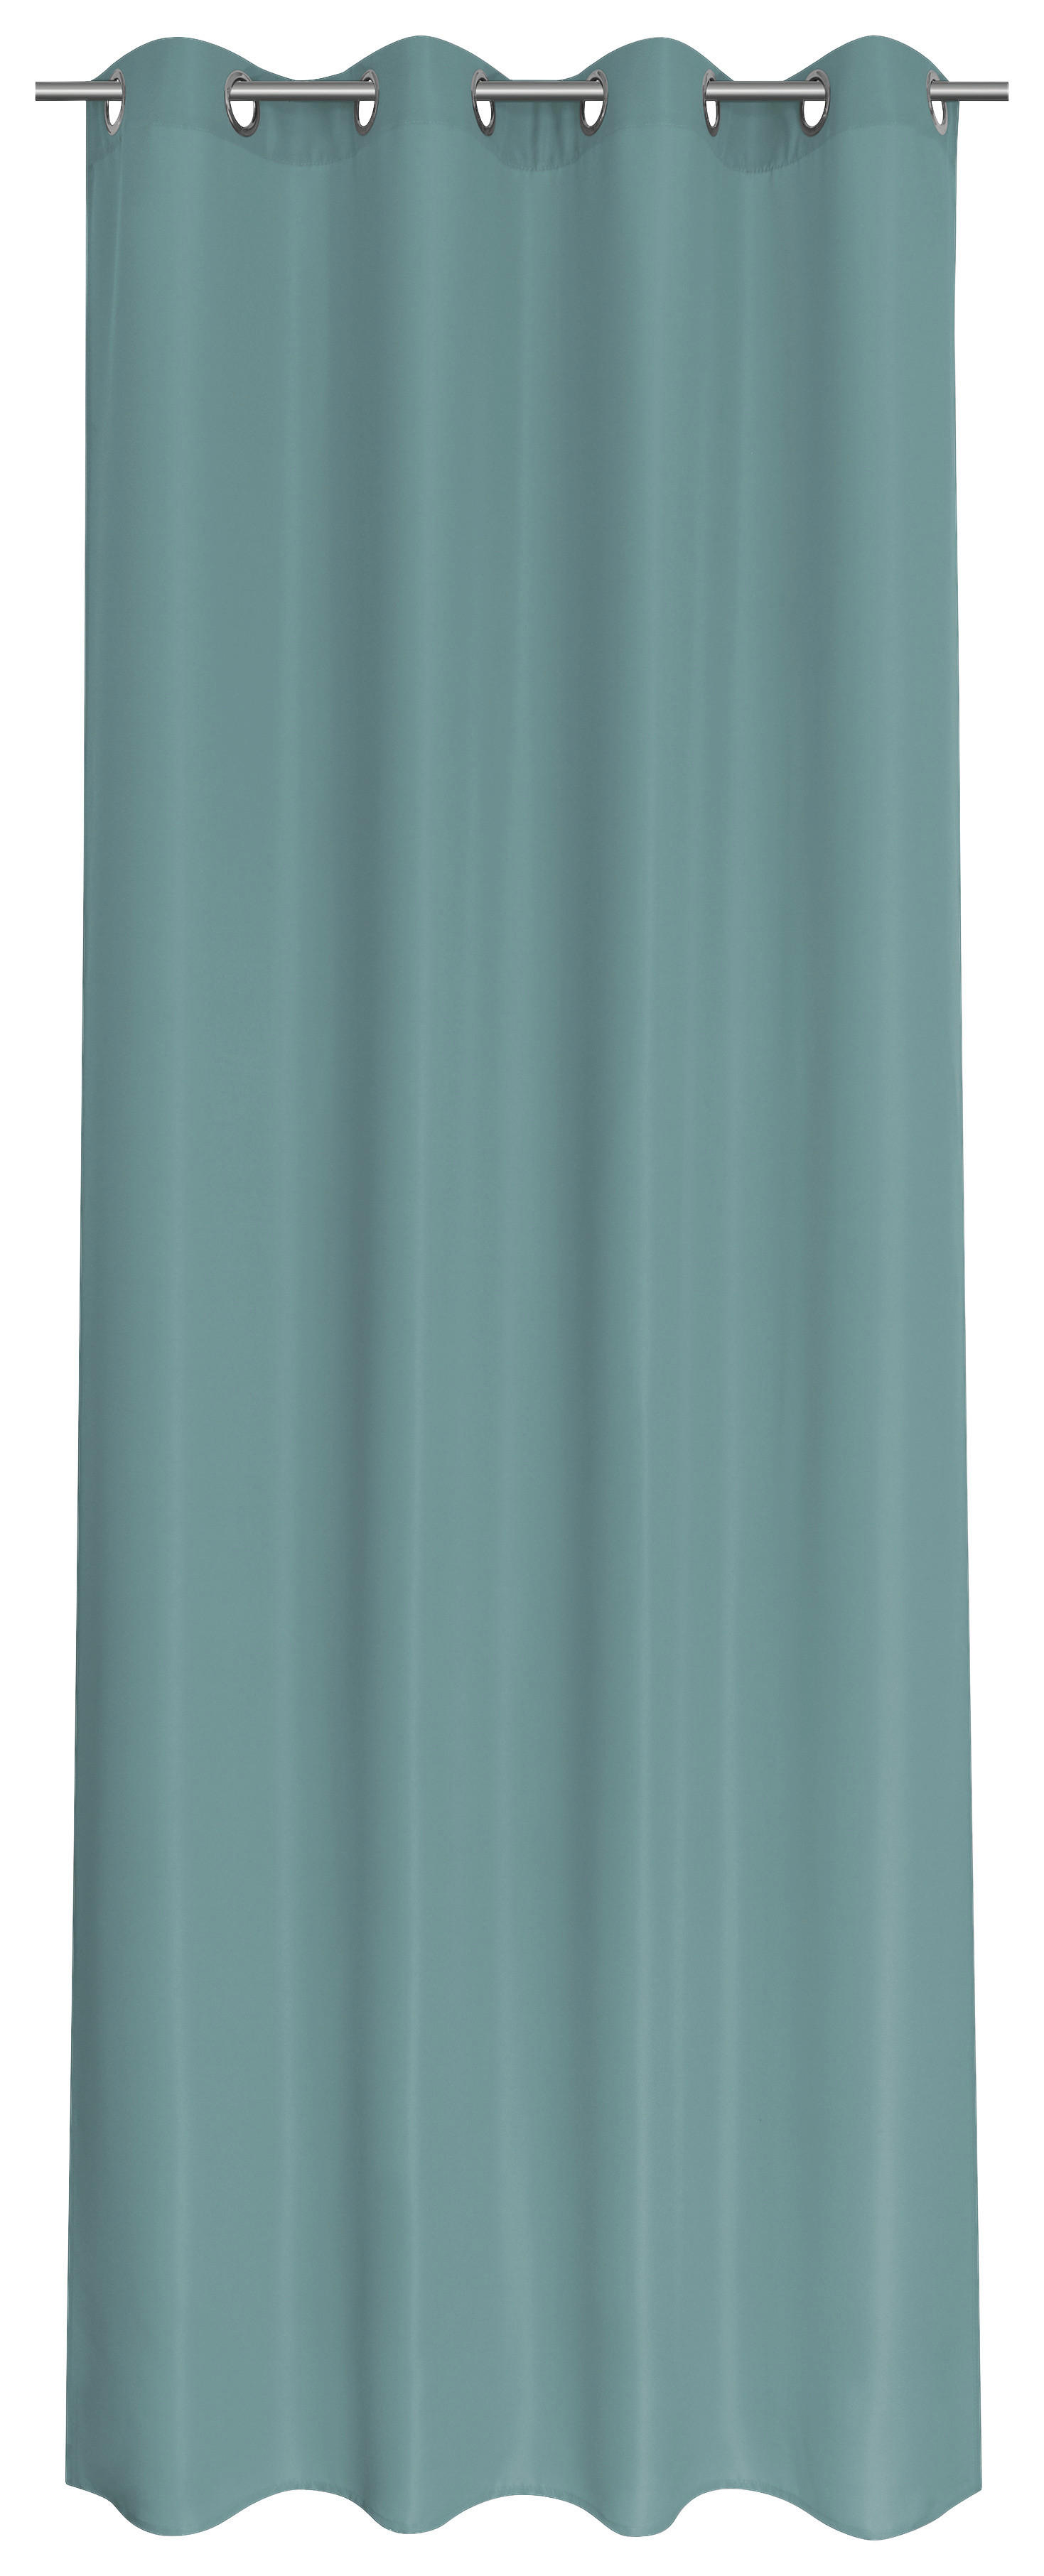 Ösenvorhang Sorrento rauchblau B/L: ca. 140x245 cm Sorrento - rauchblau (140,00/245,00cm)